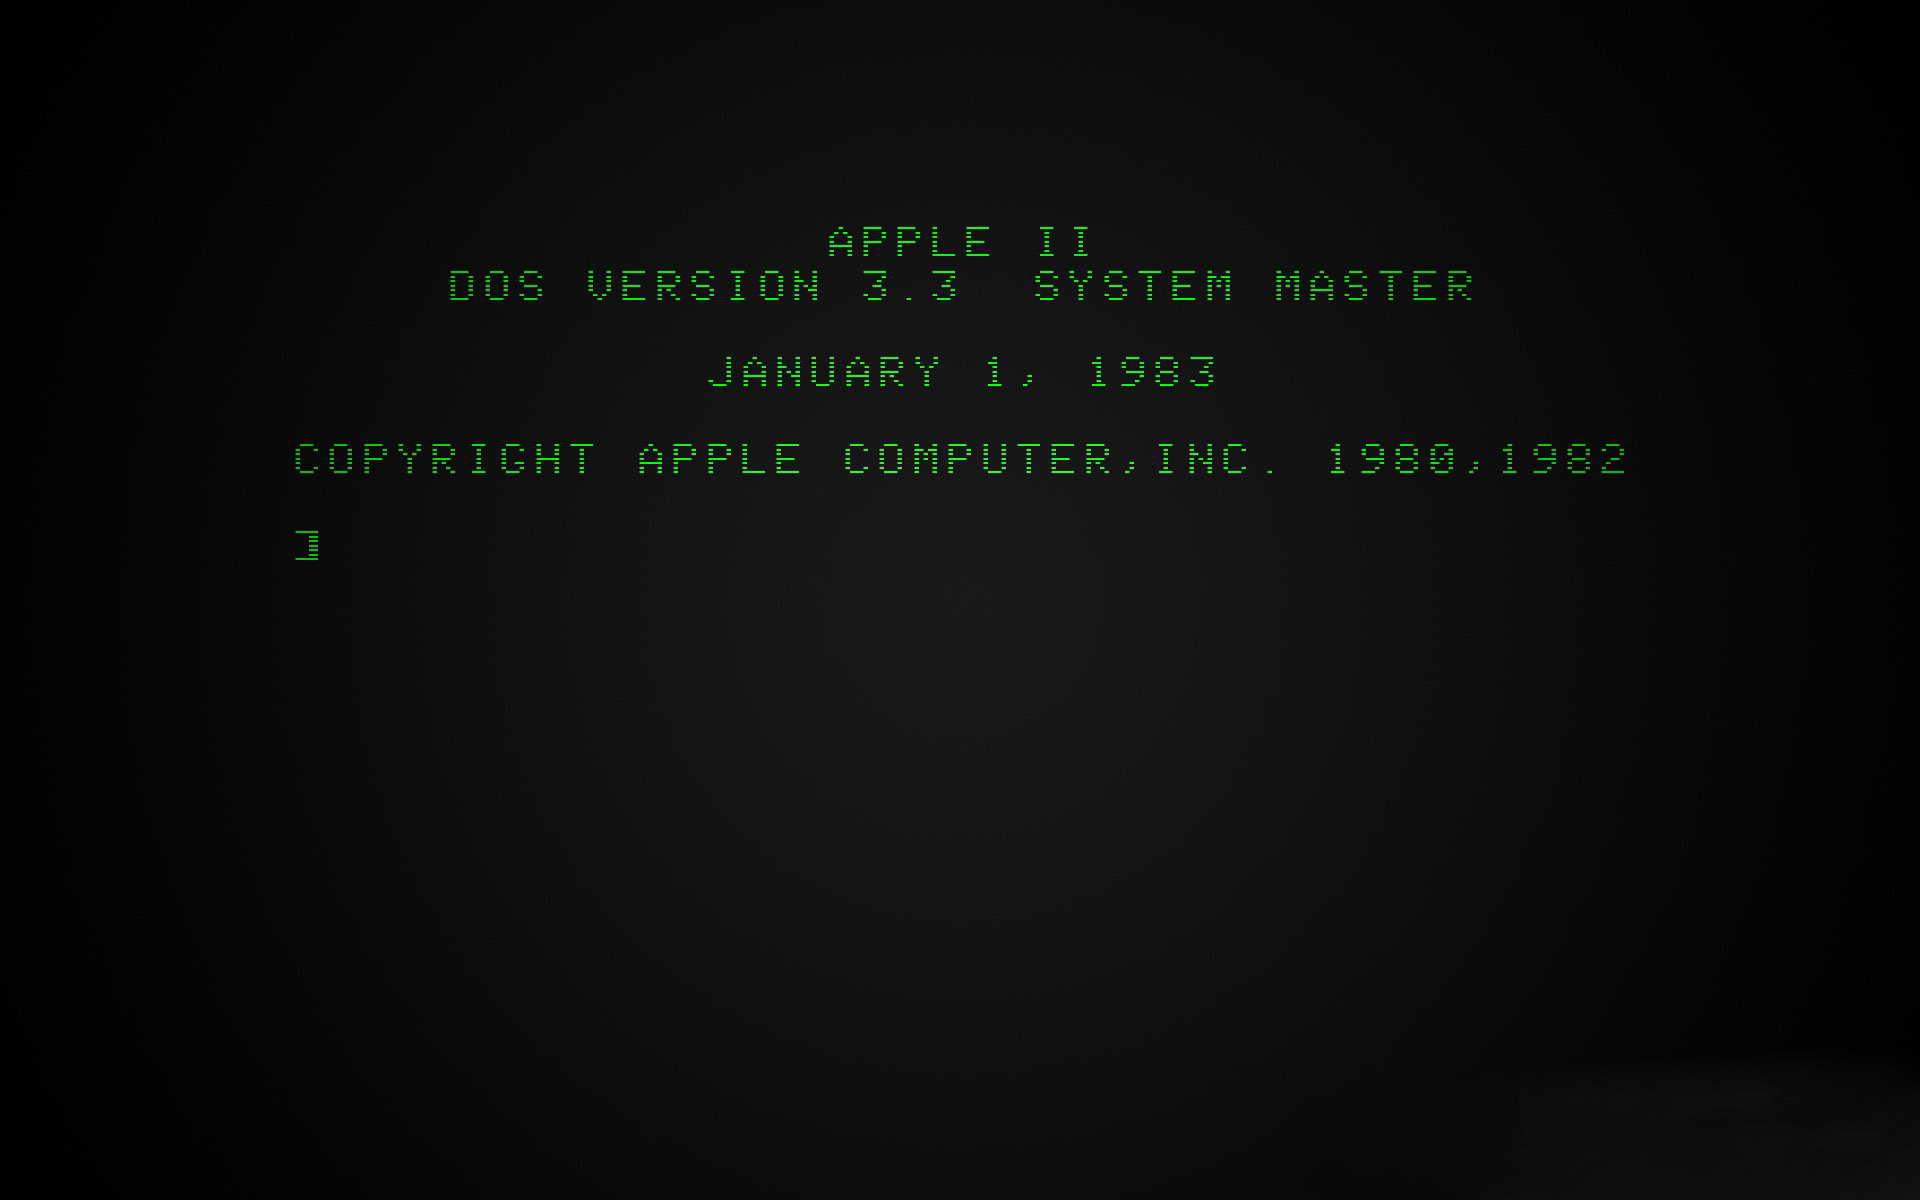 Apple II Boot Screen Wallpaper